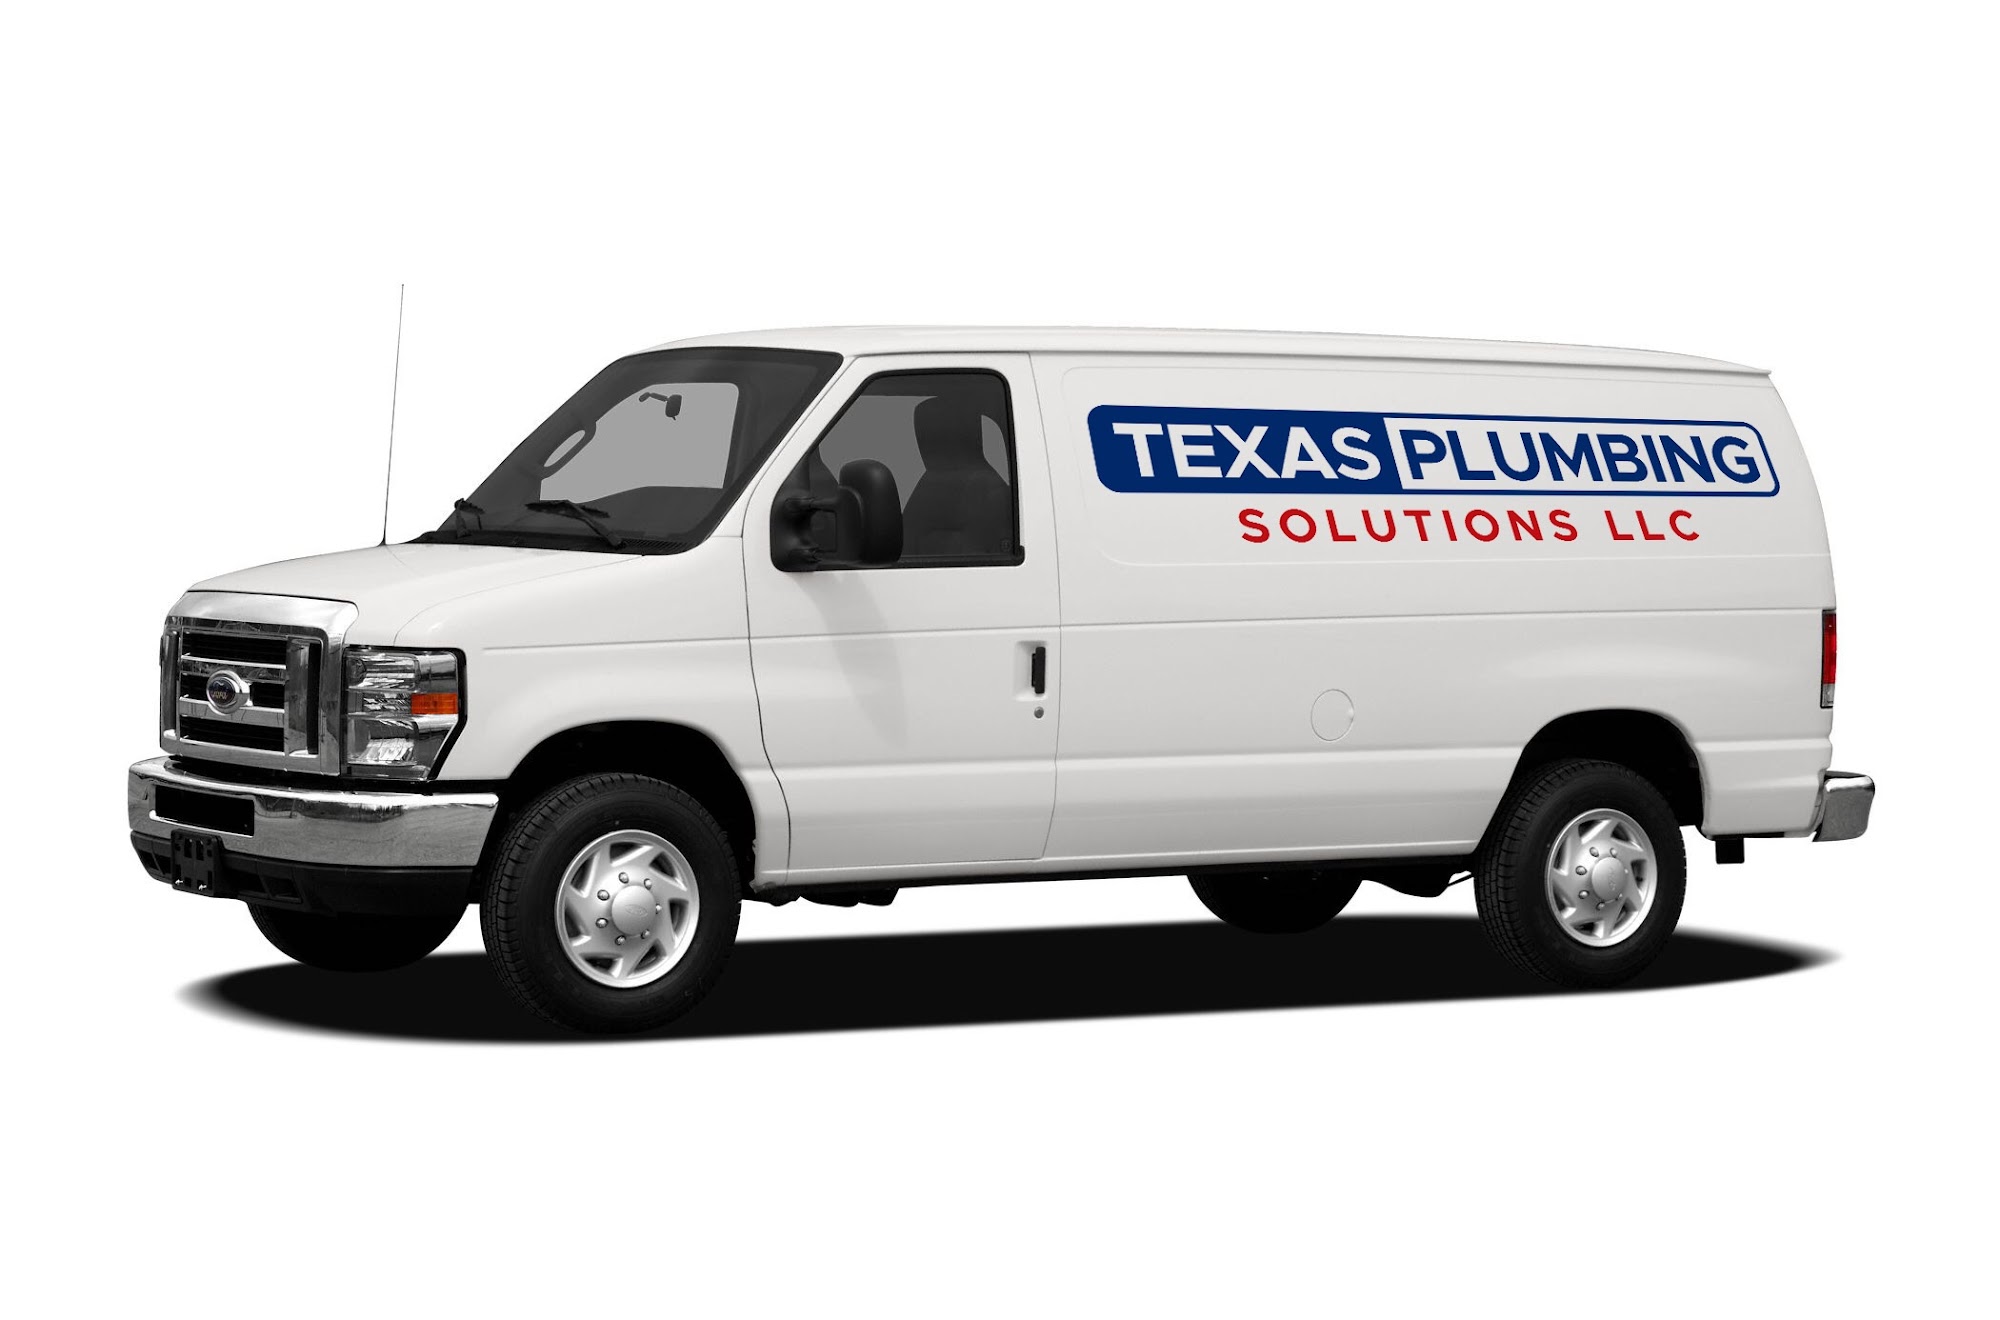 Texas Plumbing Solutions LLC